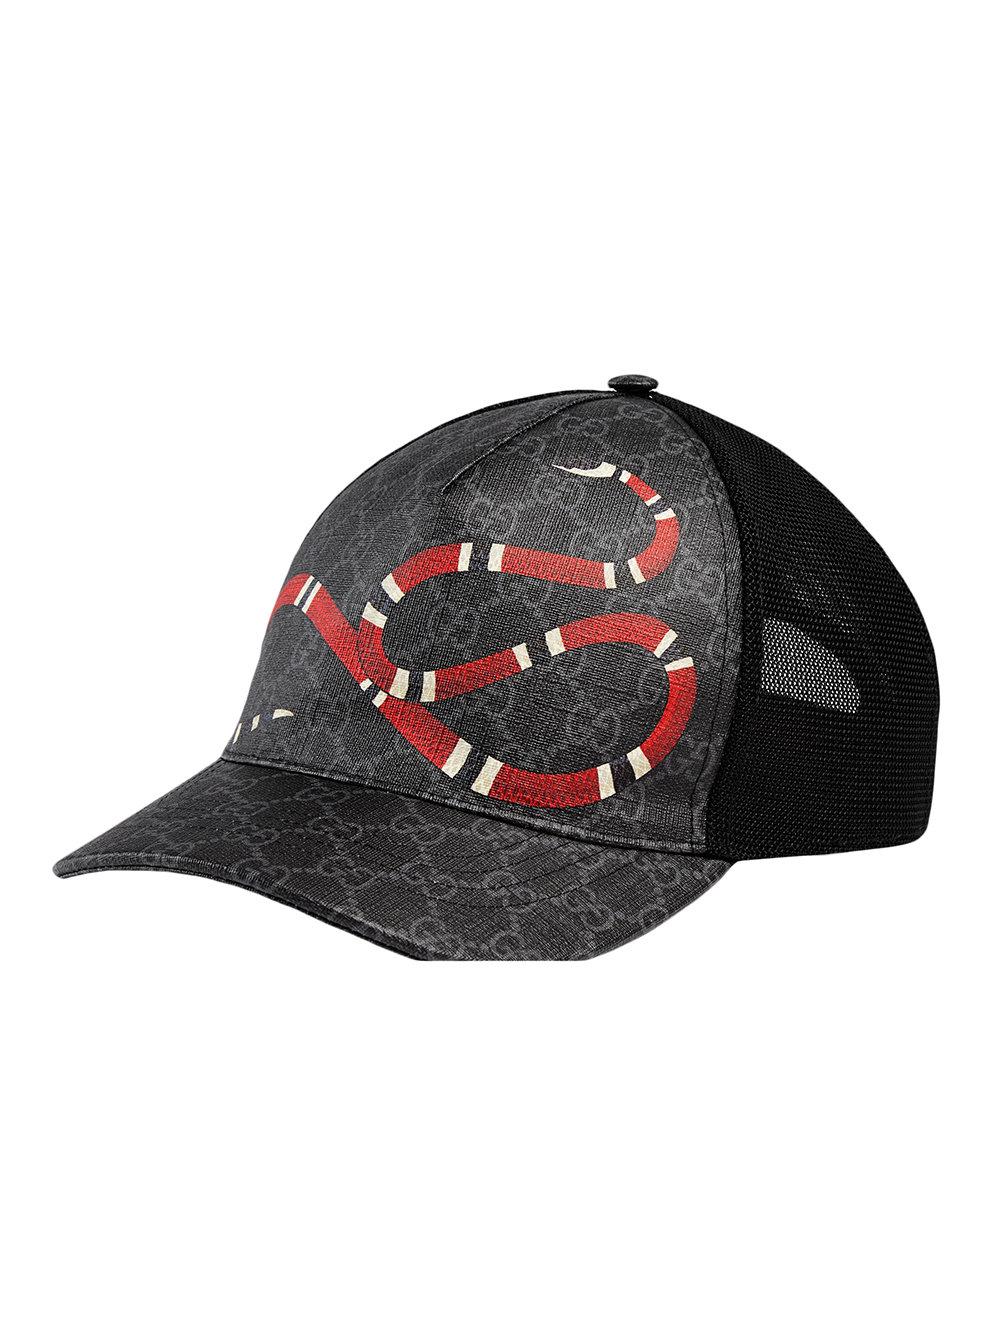 Gucci Canvas Snake GG Jacquard Baseball Cap in Black Black (Black) for Men  - Save 45% | Lyst